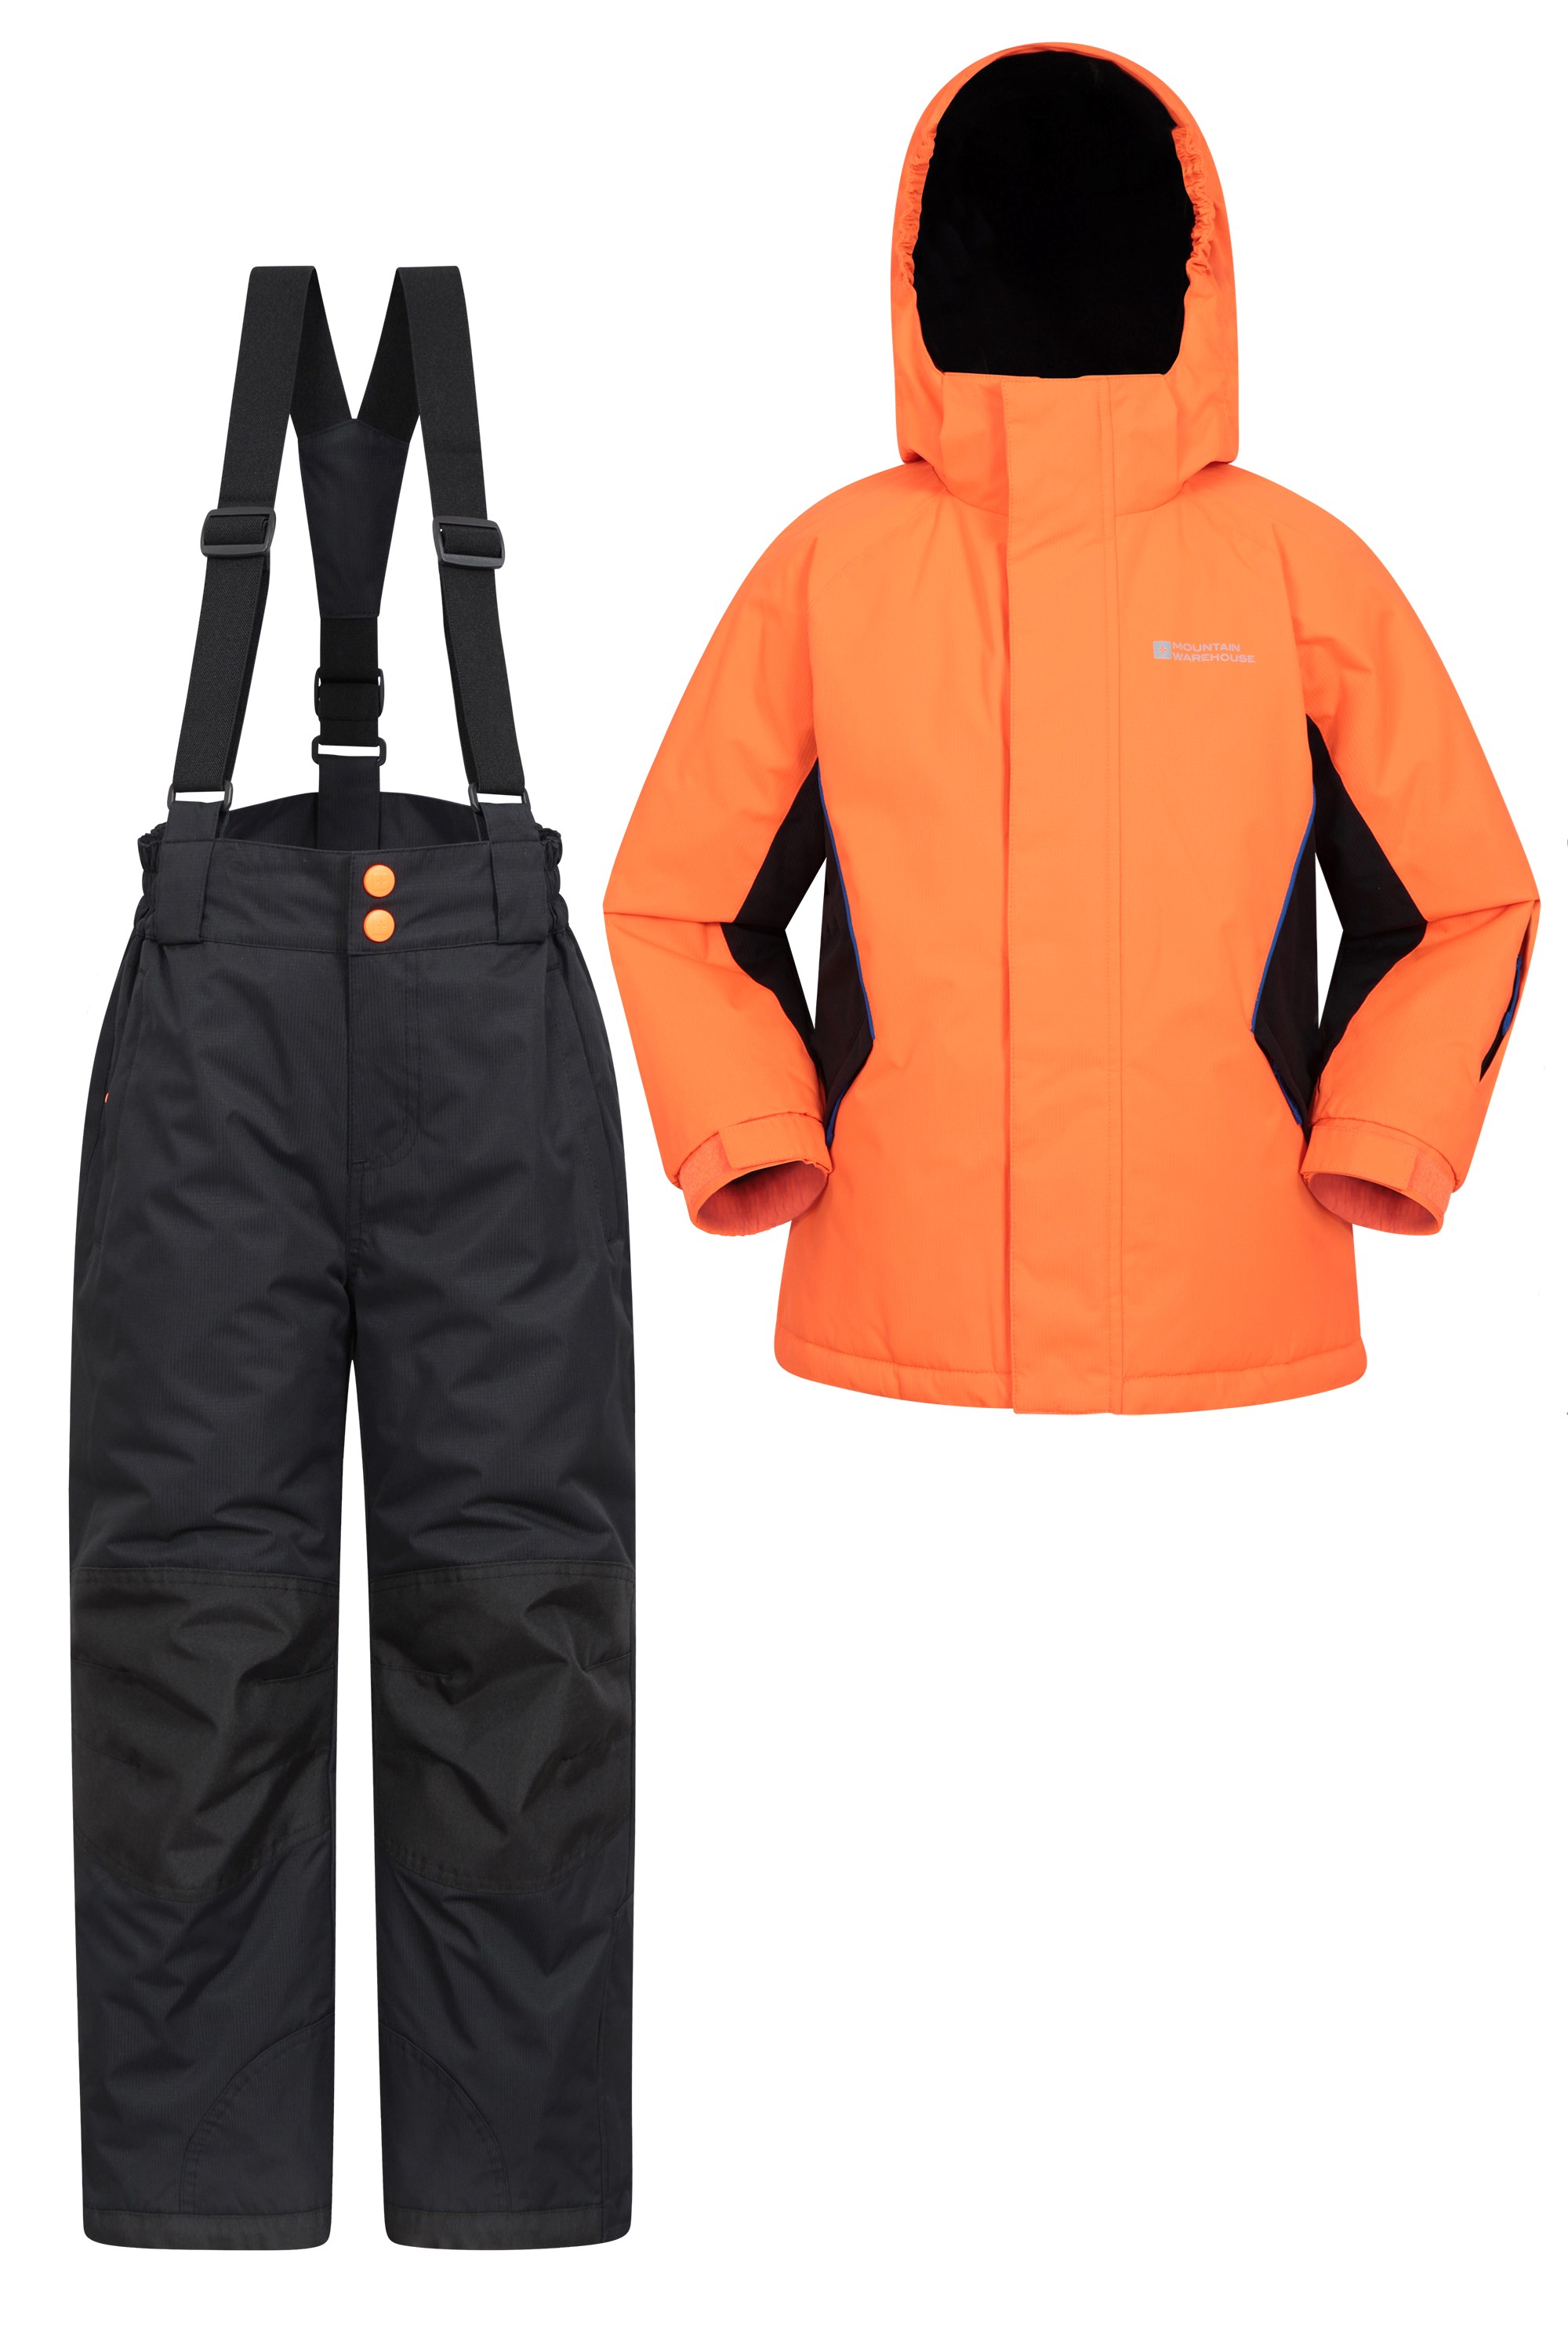 Mountain Warehouse Mountain Warehouse Kids Ski Jacket Waterproof Fleece Lined Girls Boys Coat 